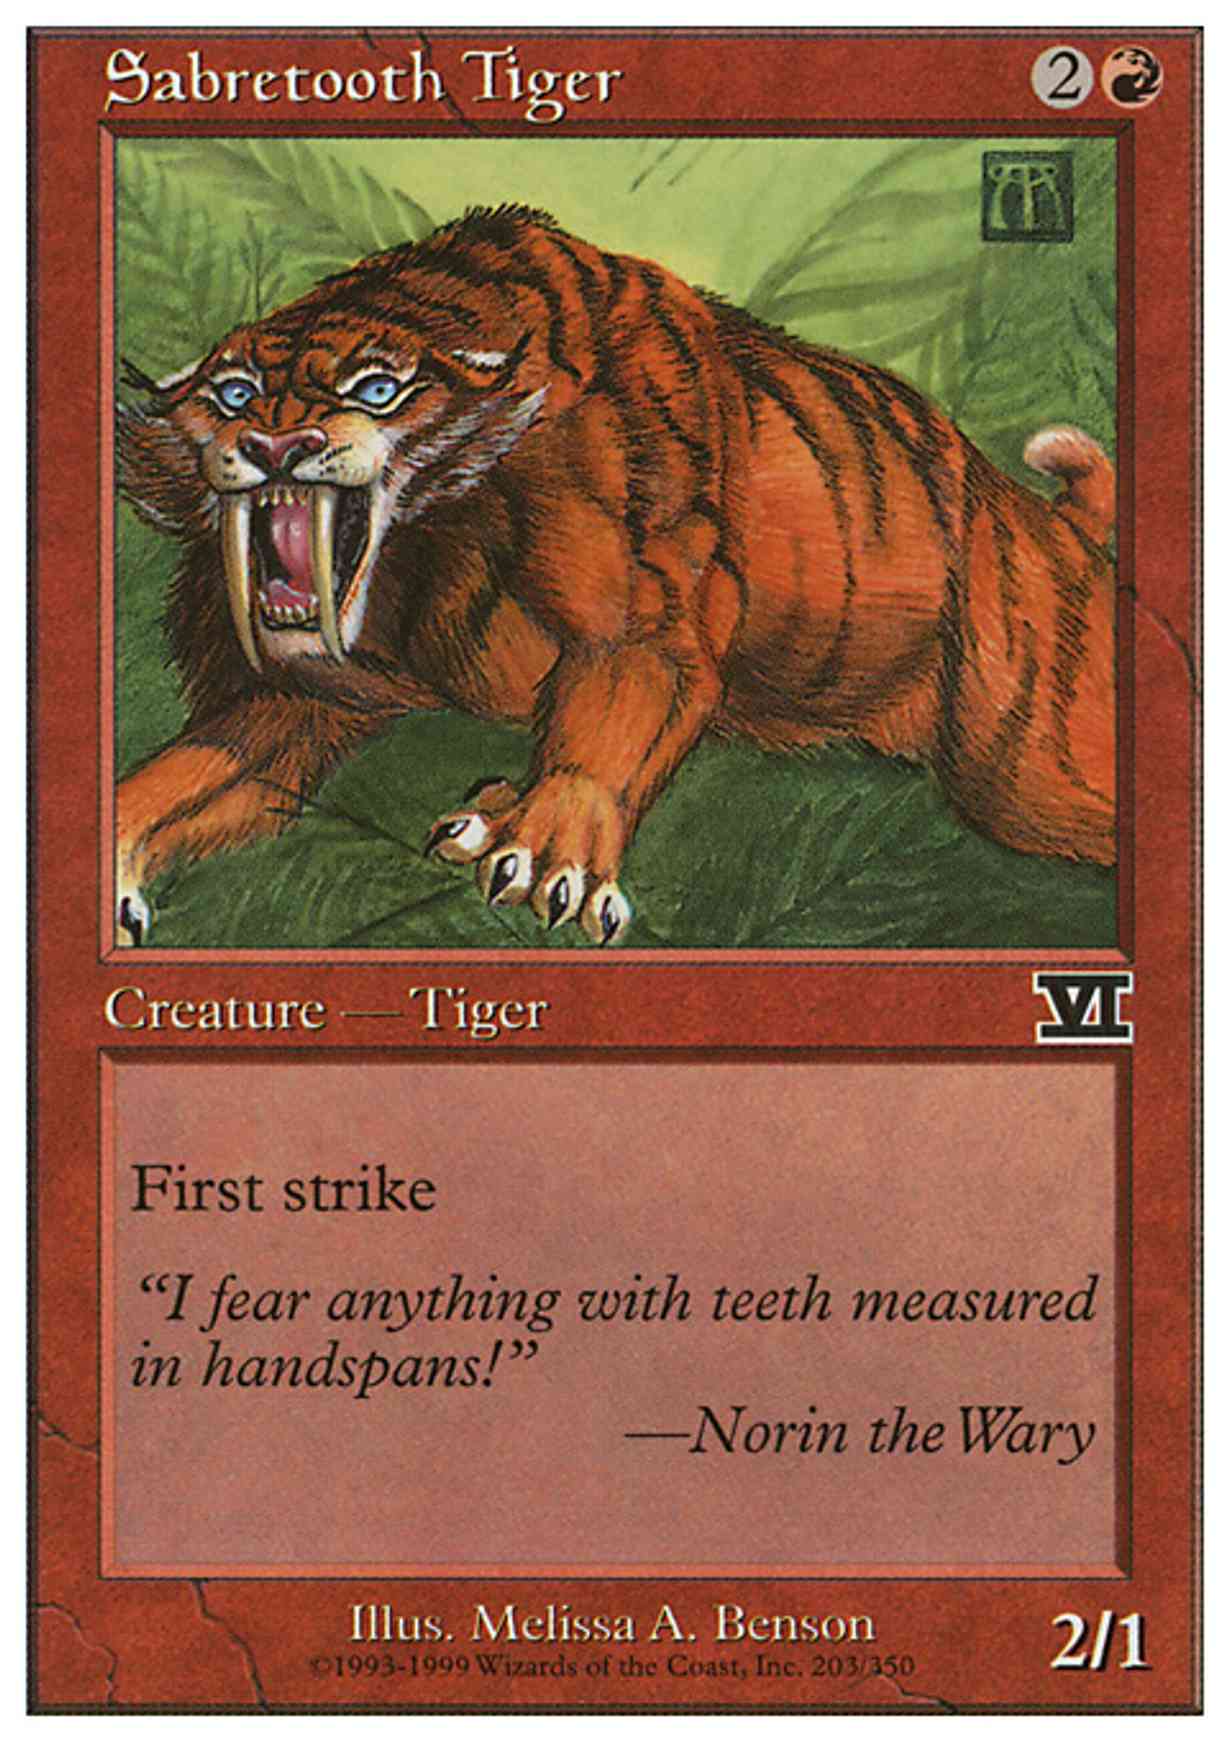 Sabretooth Tiger magic card front